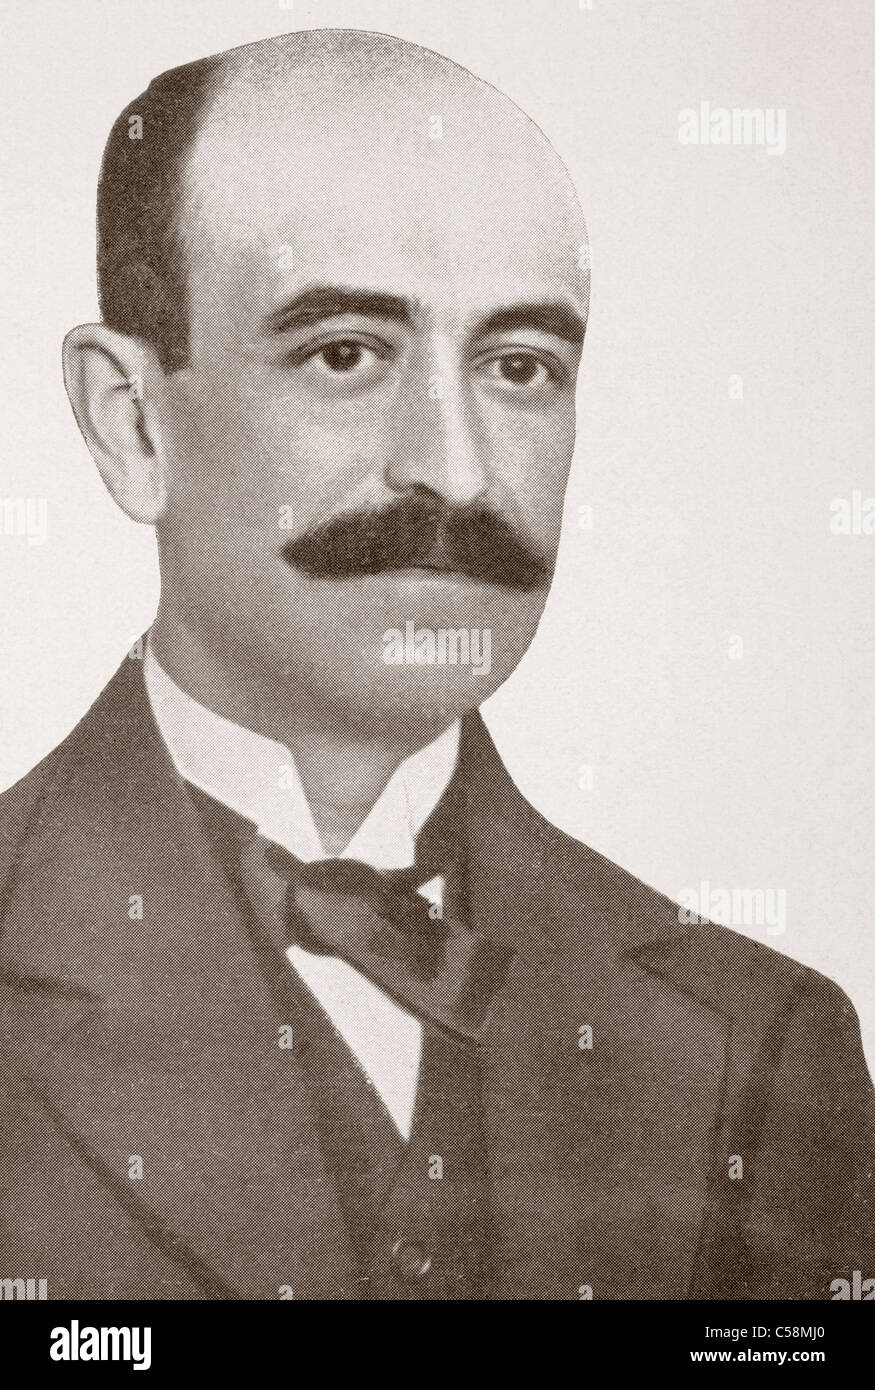 Manuel de Falla y Matheu, 1876 – 1946. Spanish composer. Stock Photo